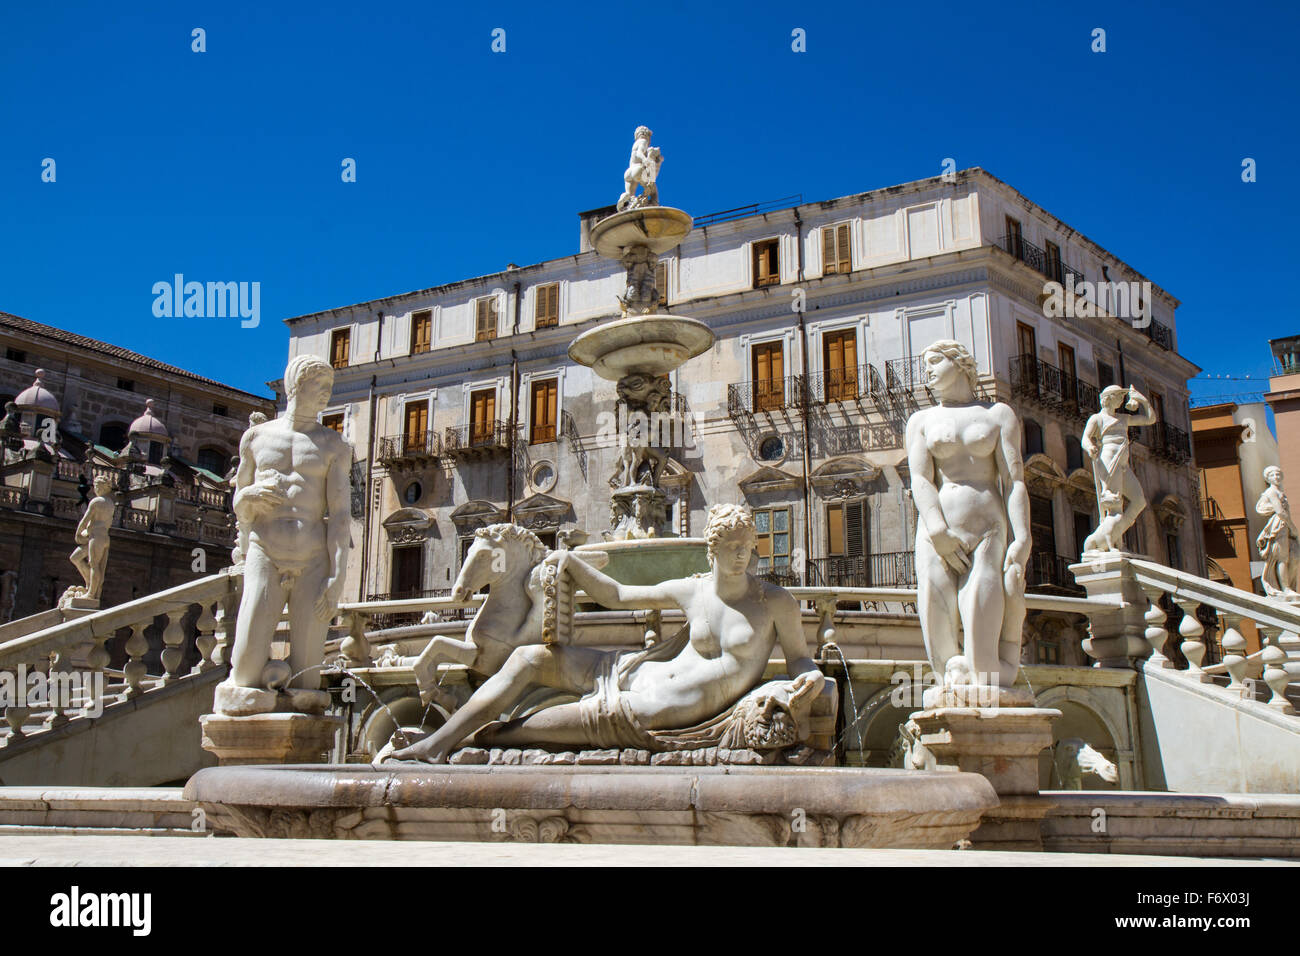 Fontana Pretoria de Palermo, Sicilia, Italia Foto de stock